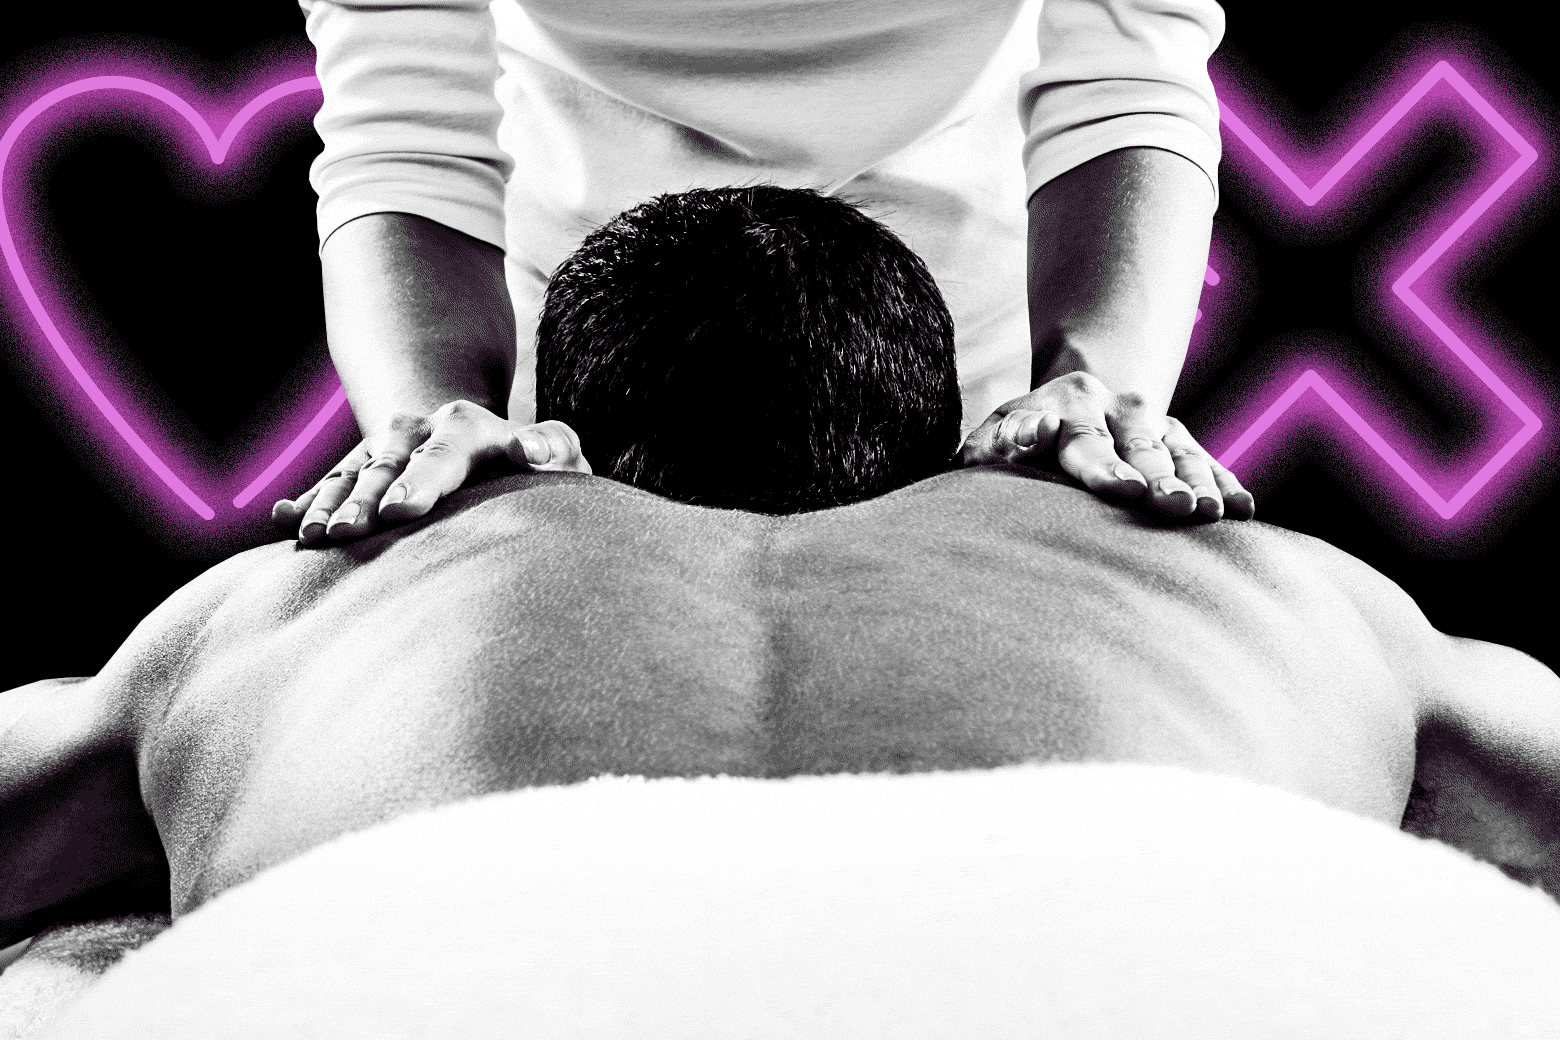 Gave back massage slutty free porn pictures